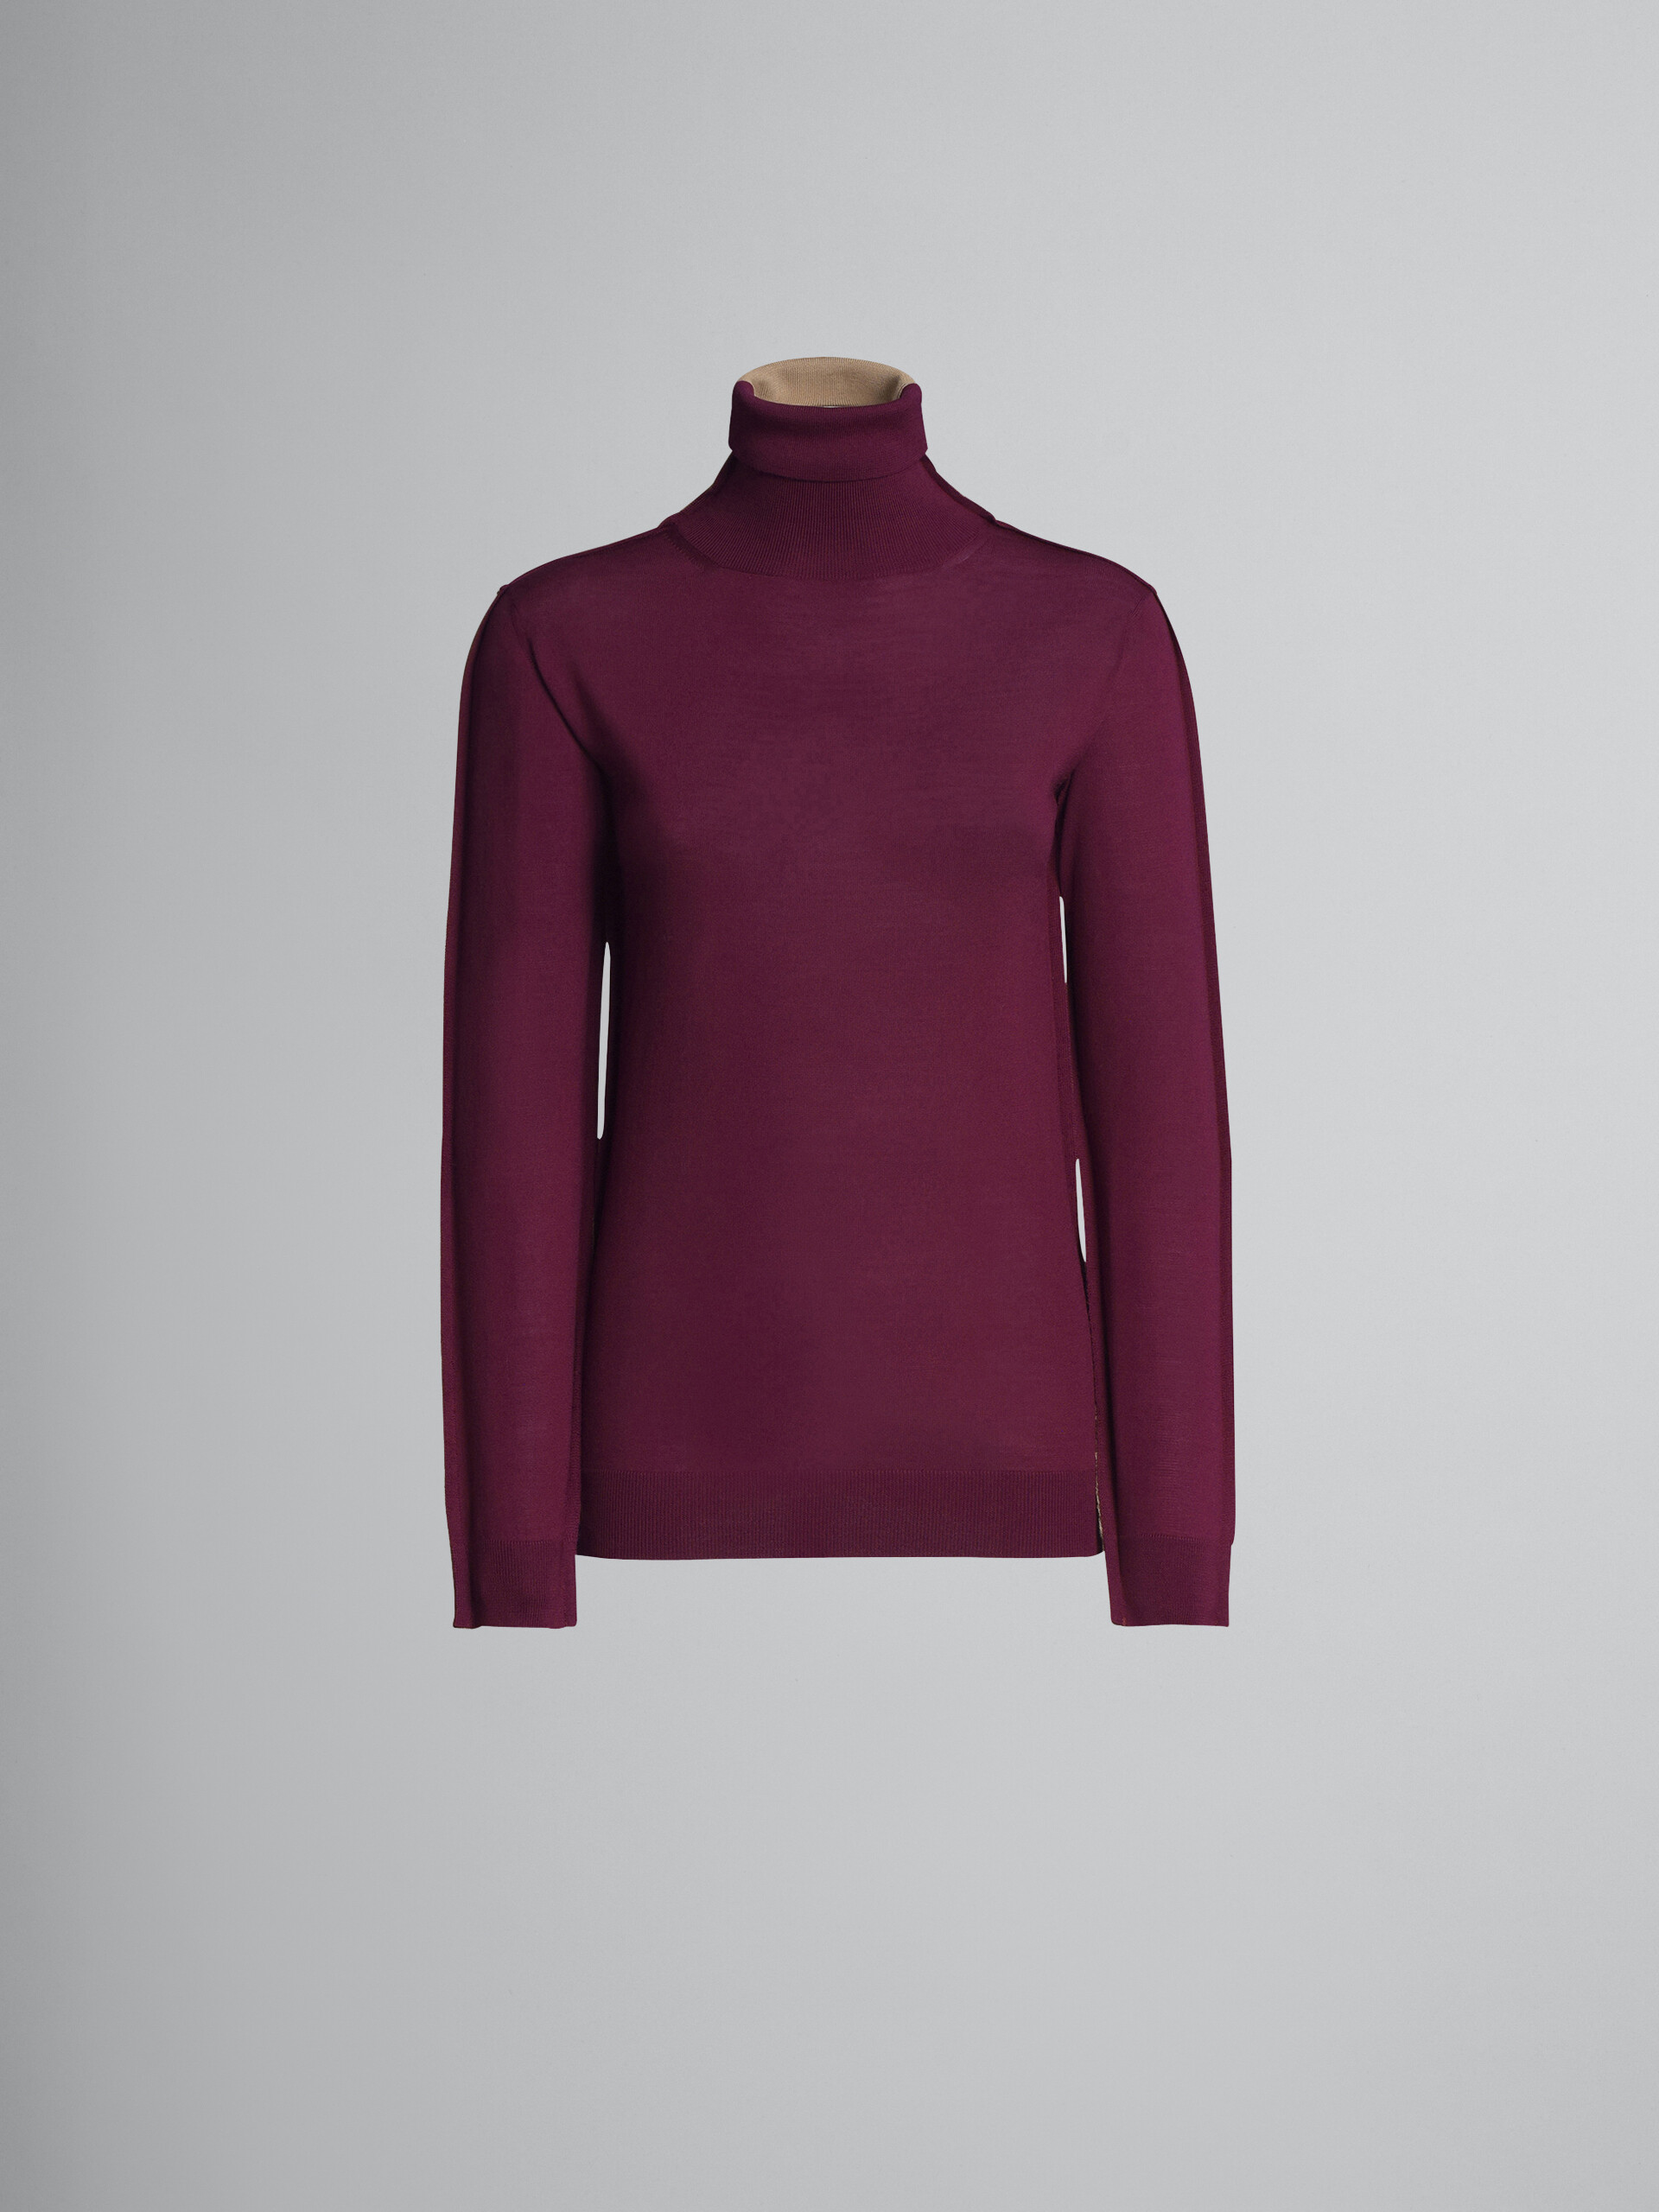 Wool turtleneck sweater - Pullovers - Image 1